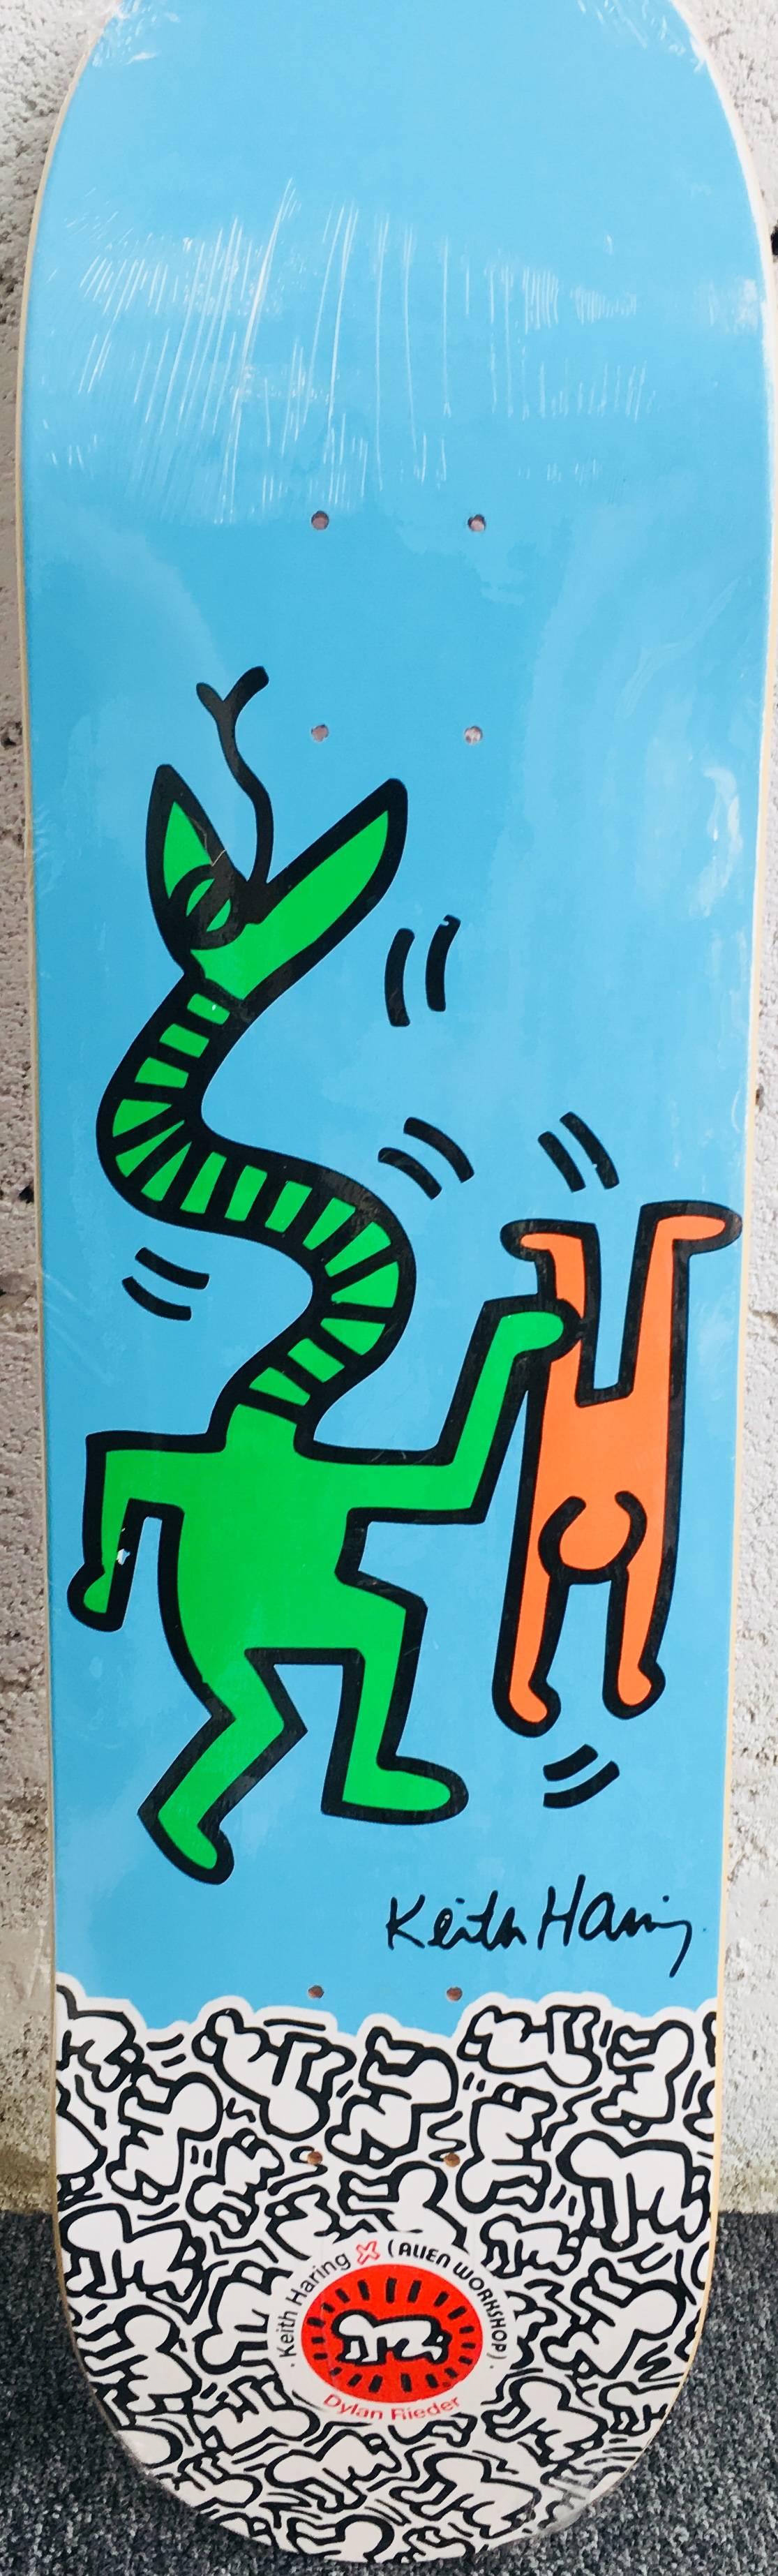 Keith Haring set of 10 skateboard decks (Keith Haring alien workshop) For Sale 7